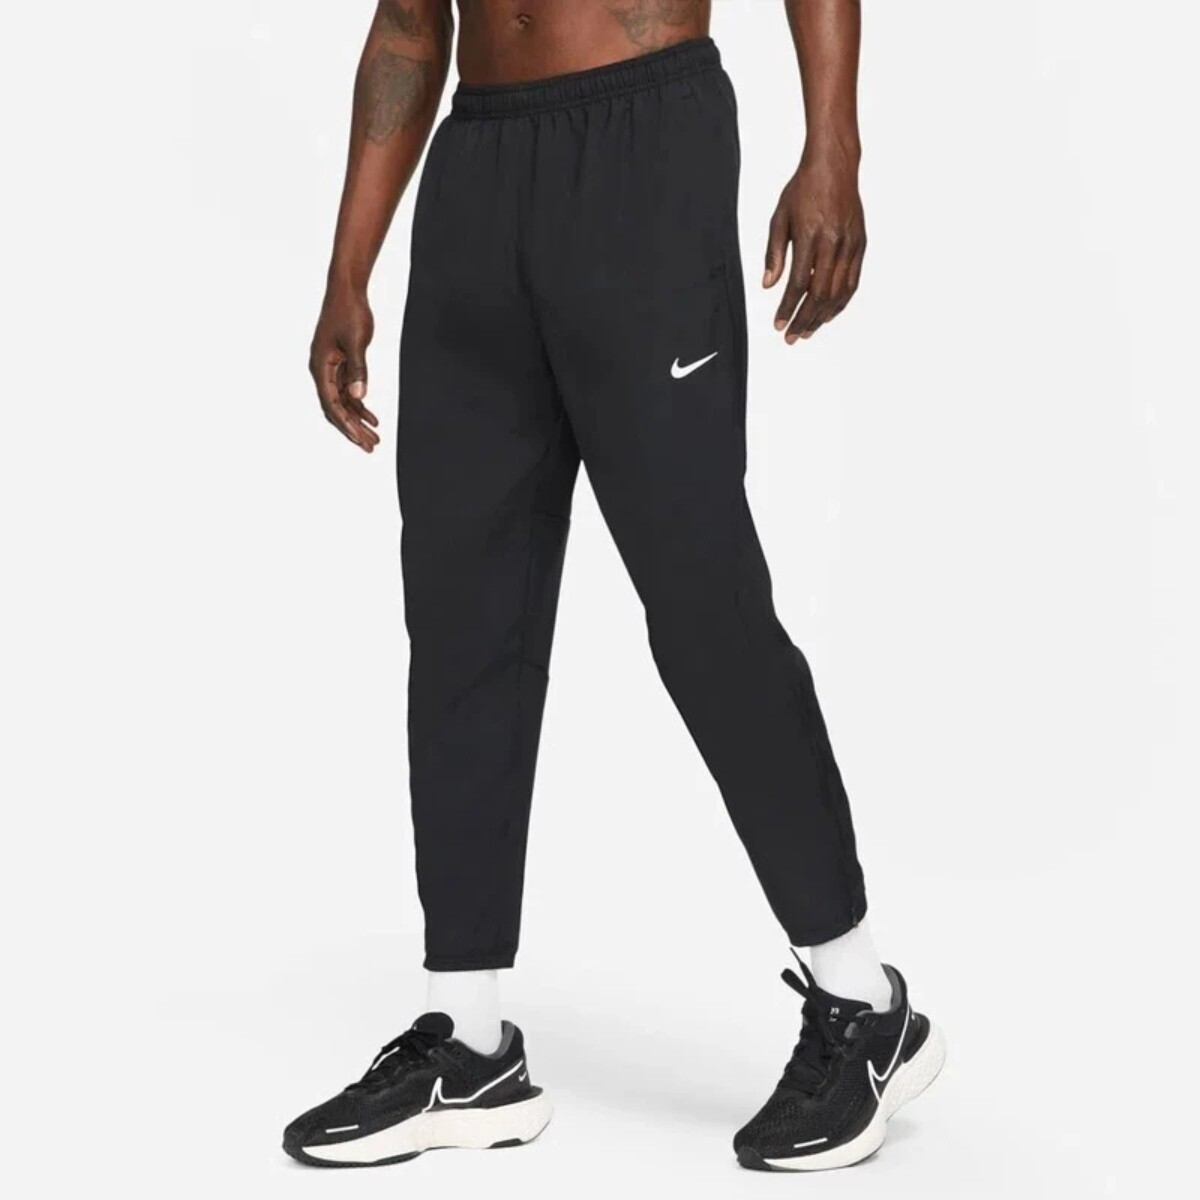 Pantalon Nike Running Hombre Df Chllgr Black - S/C 